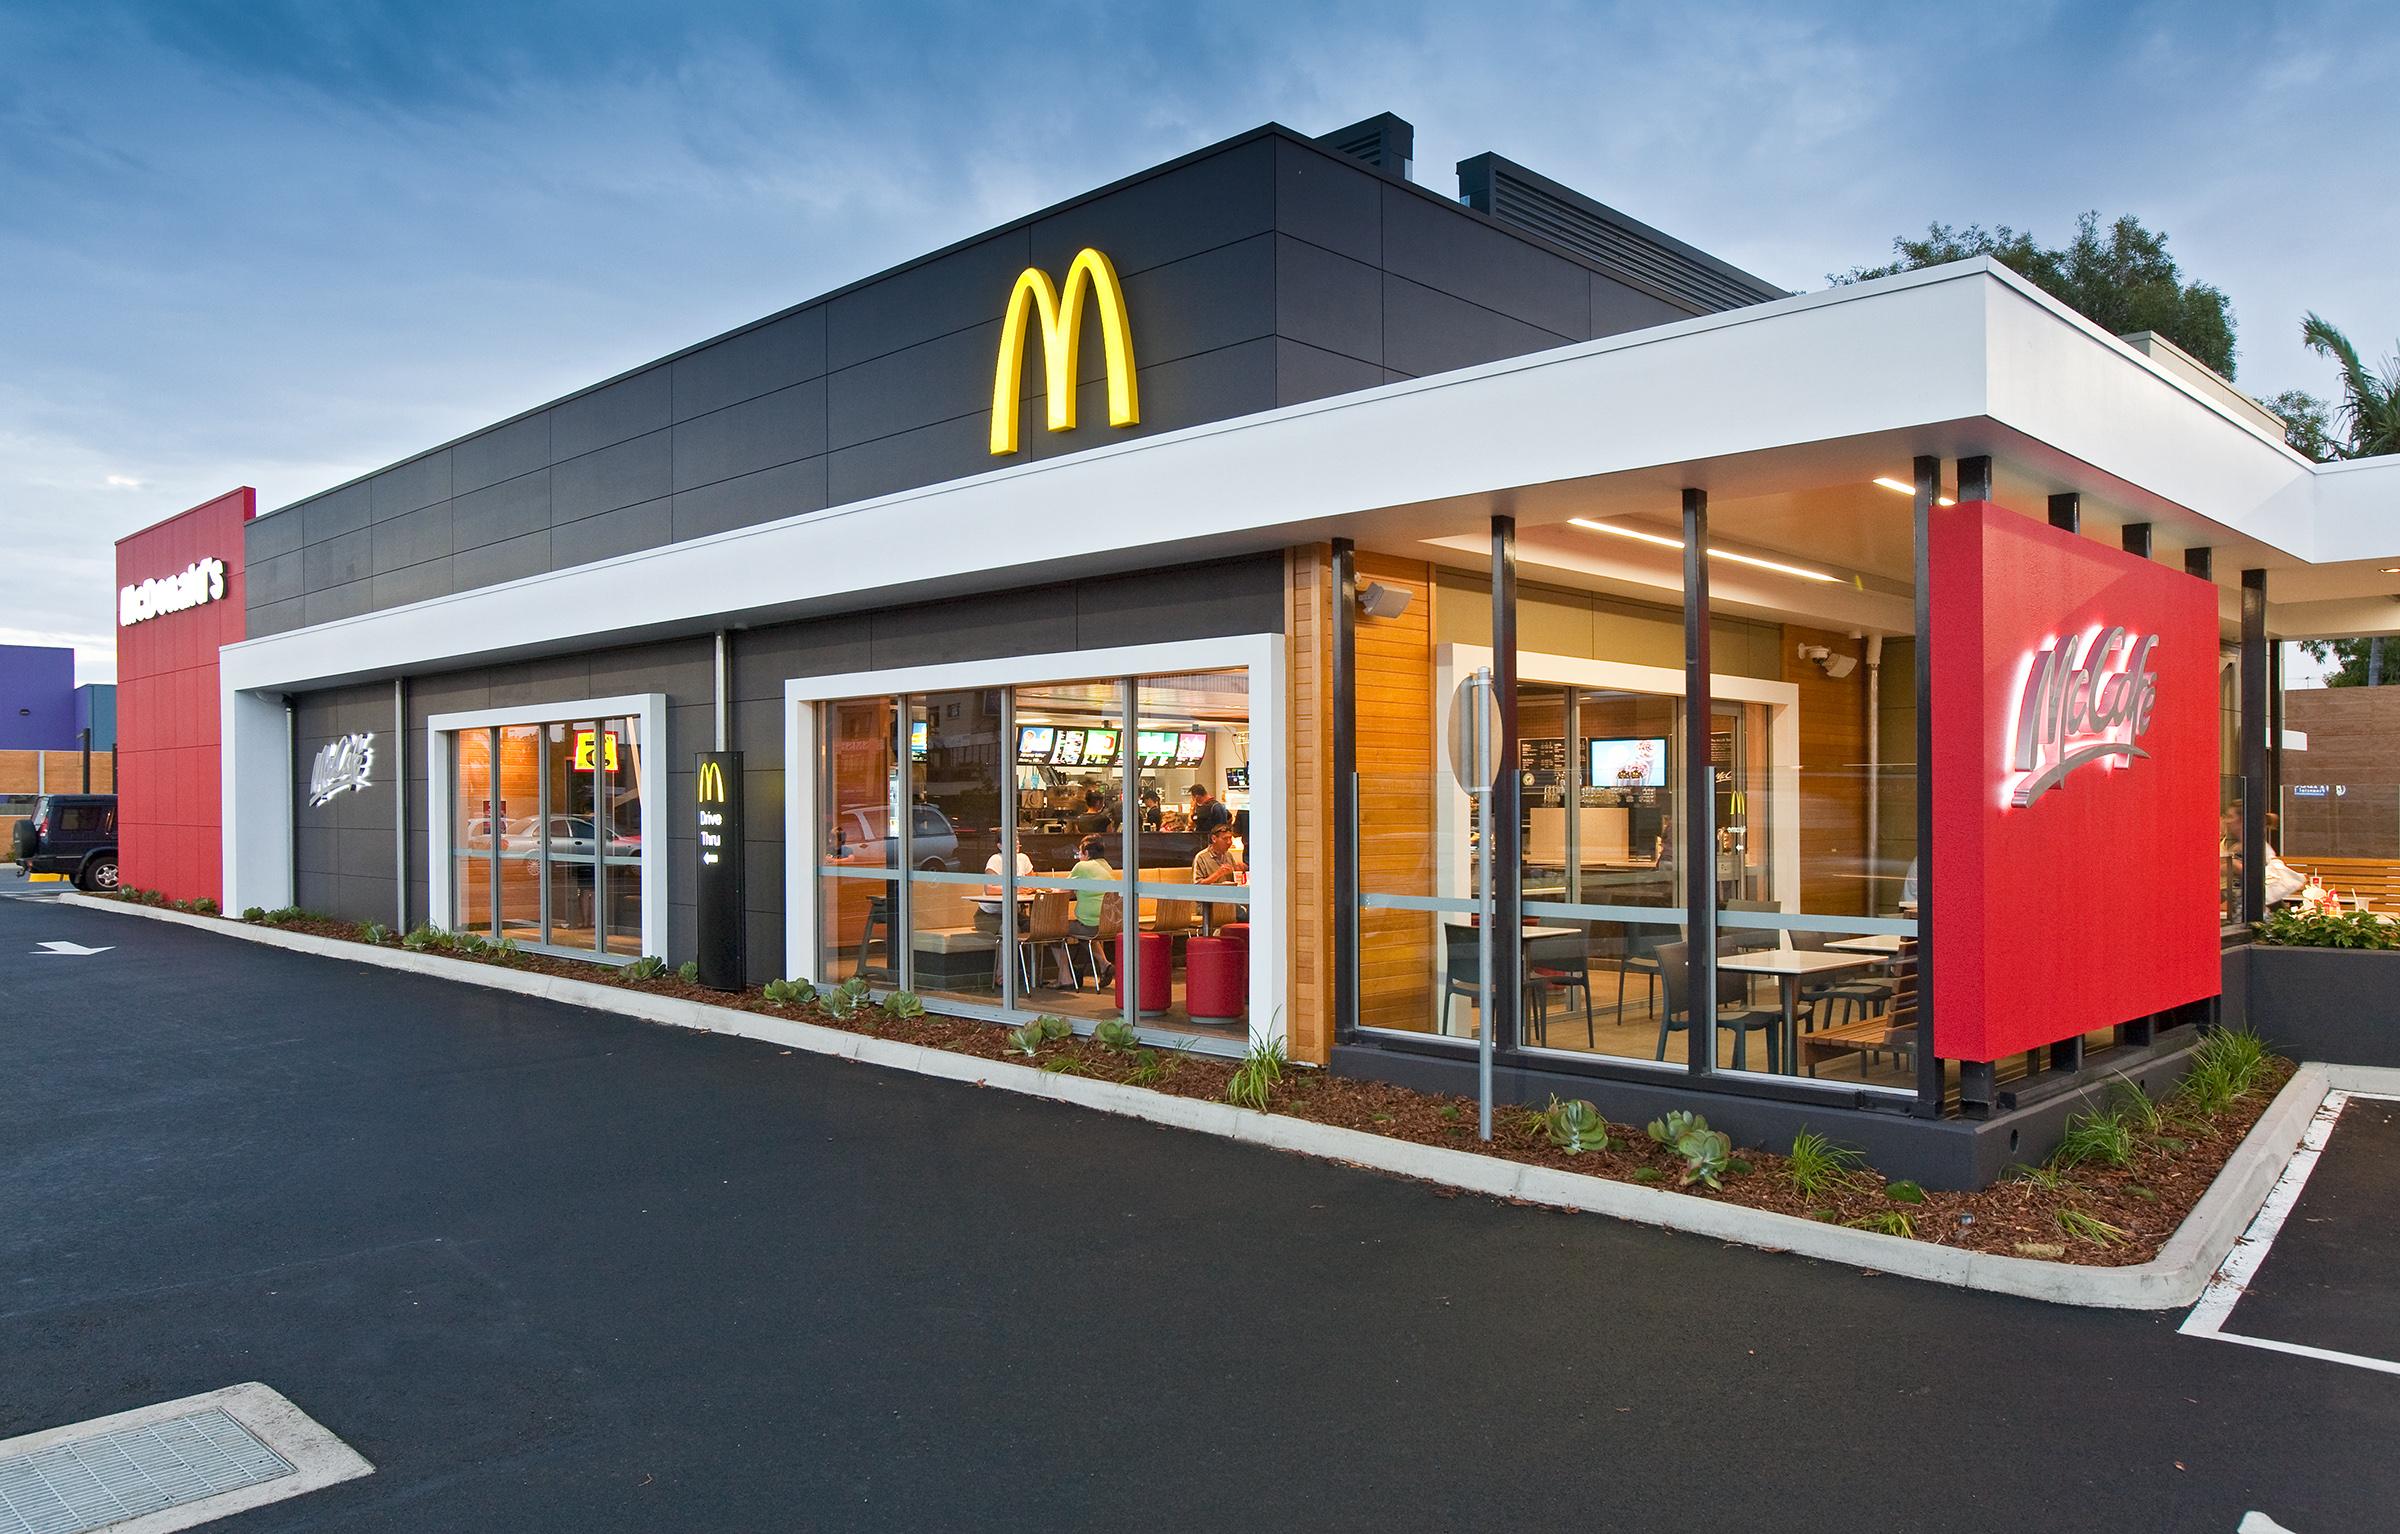 McDonald's is in Big Trouble